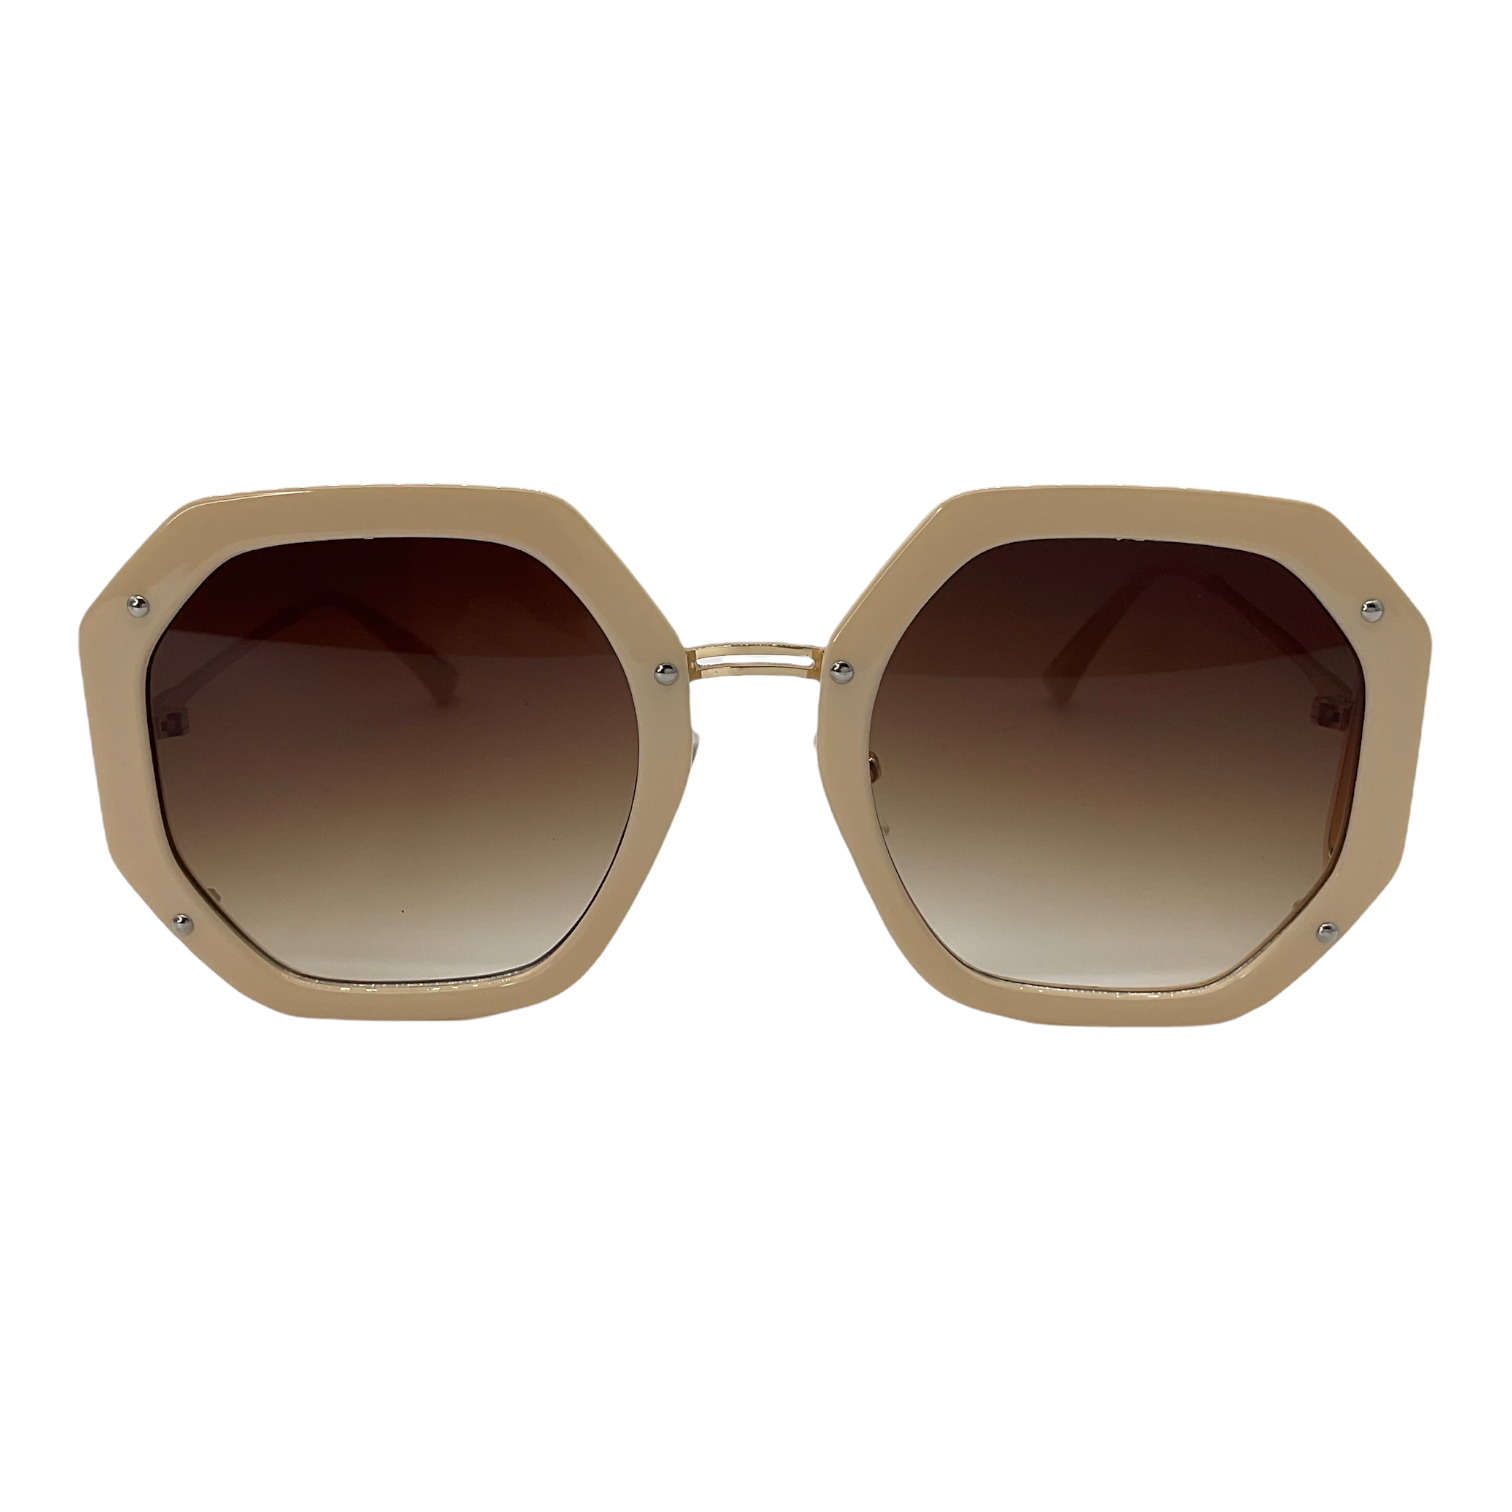 Geo Cream Women Frame with Silver Frame Sunglasses